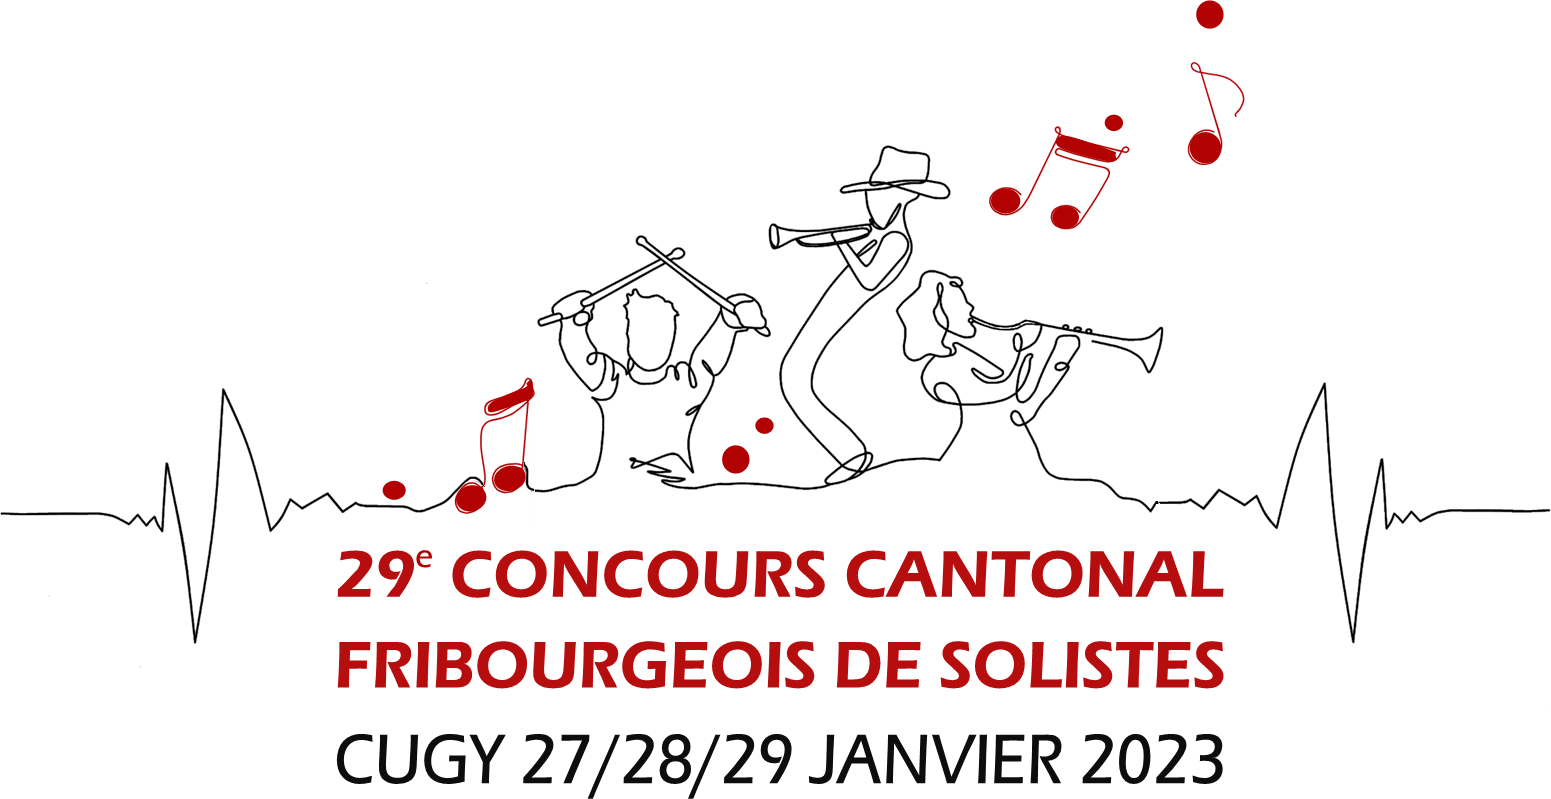 29e Concours Cantonal Fribourgeois de Soliste, Cugy 27/28/29 janvier 2023